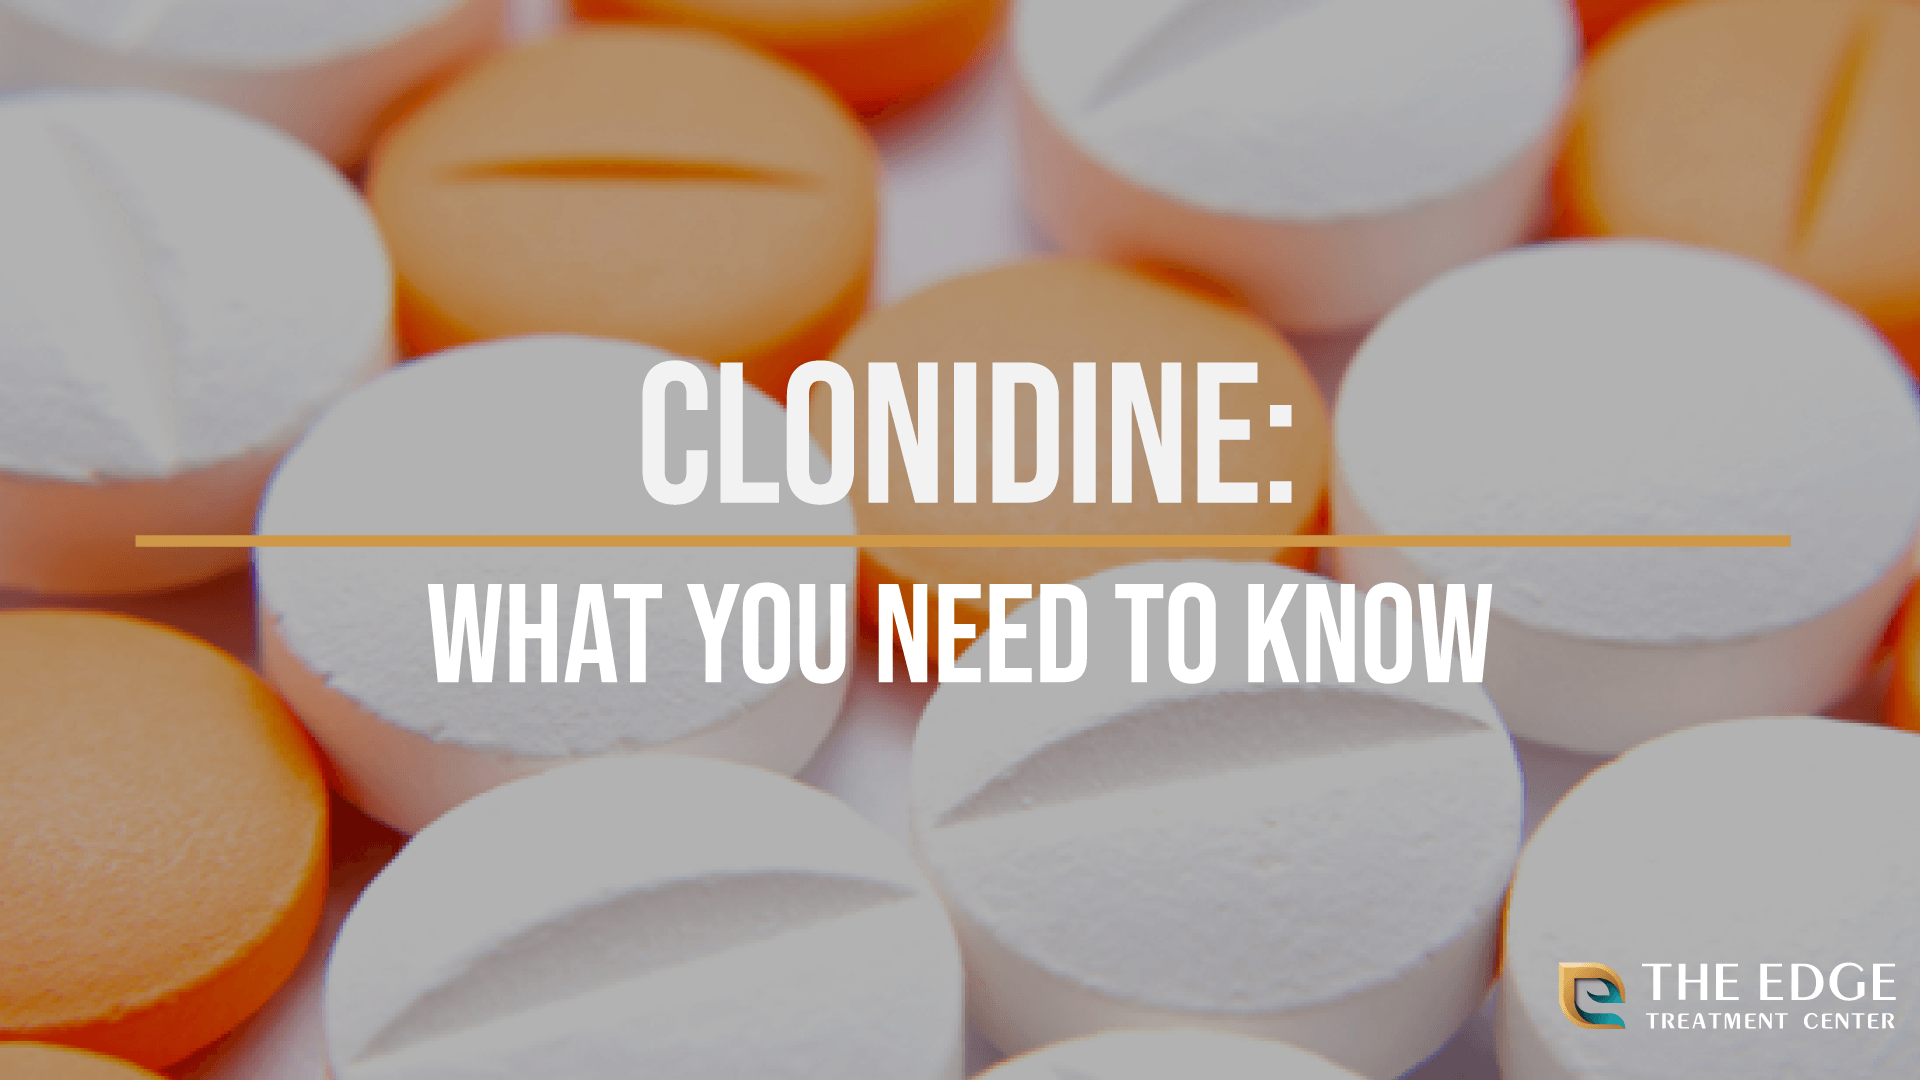 What is Clonidine?